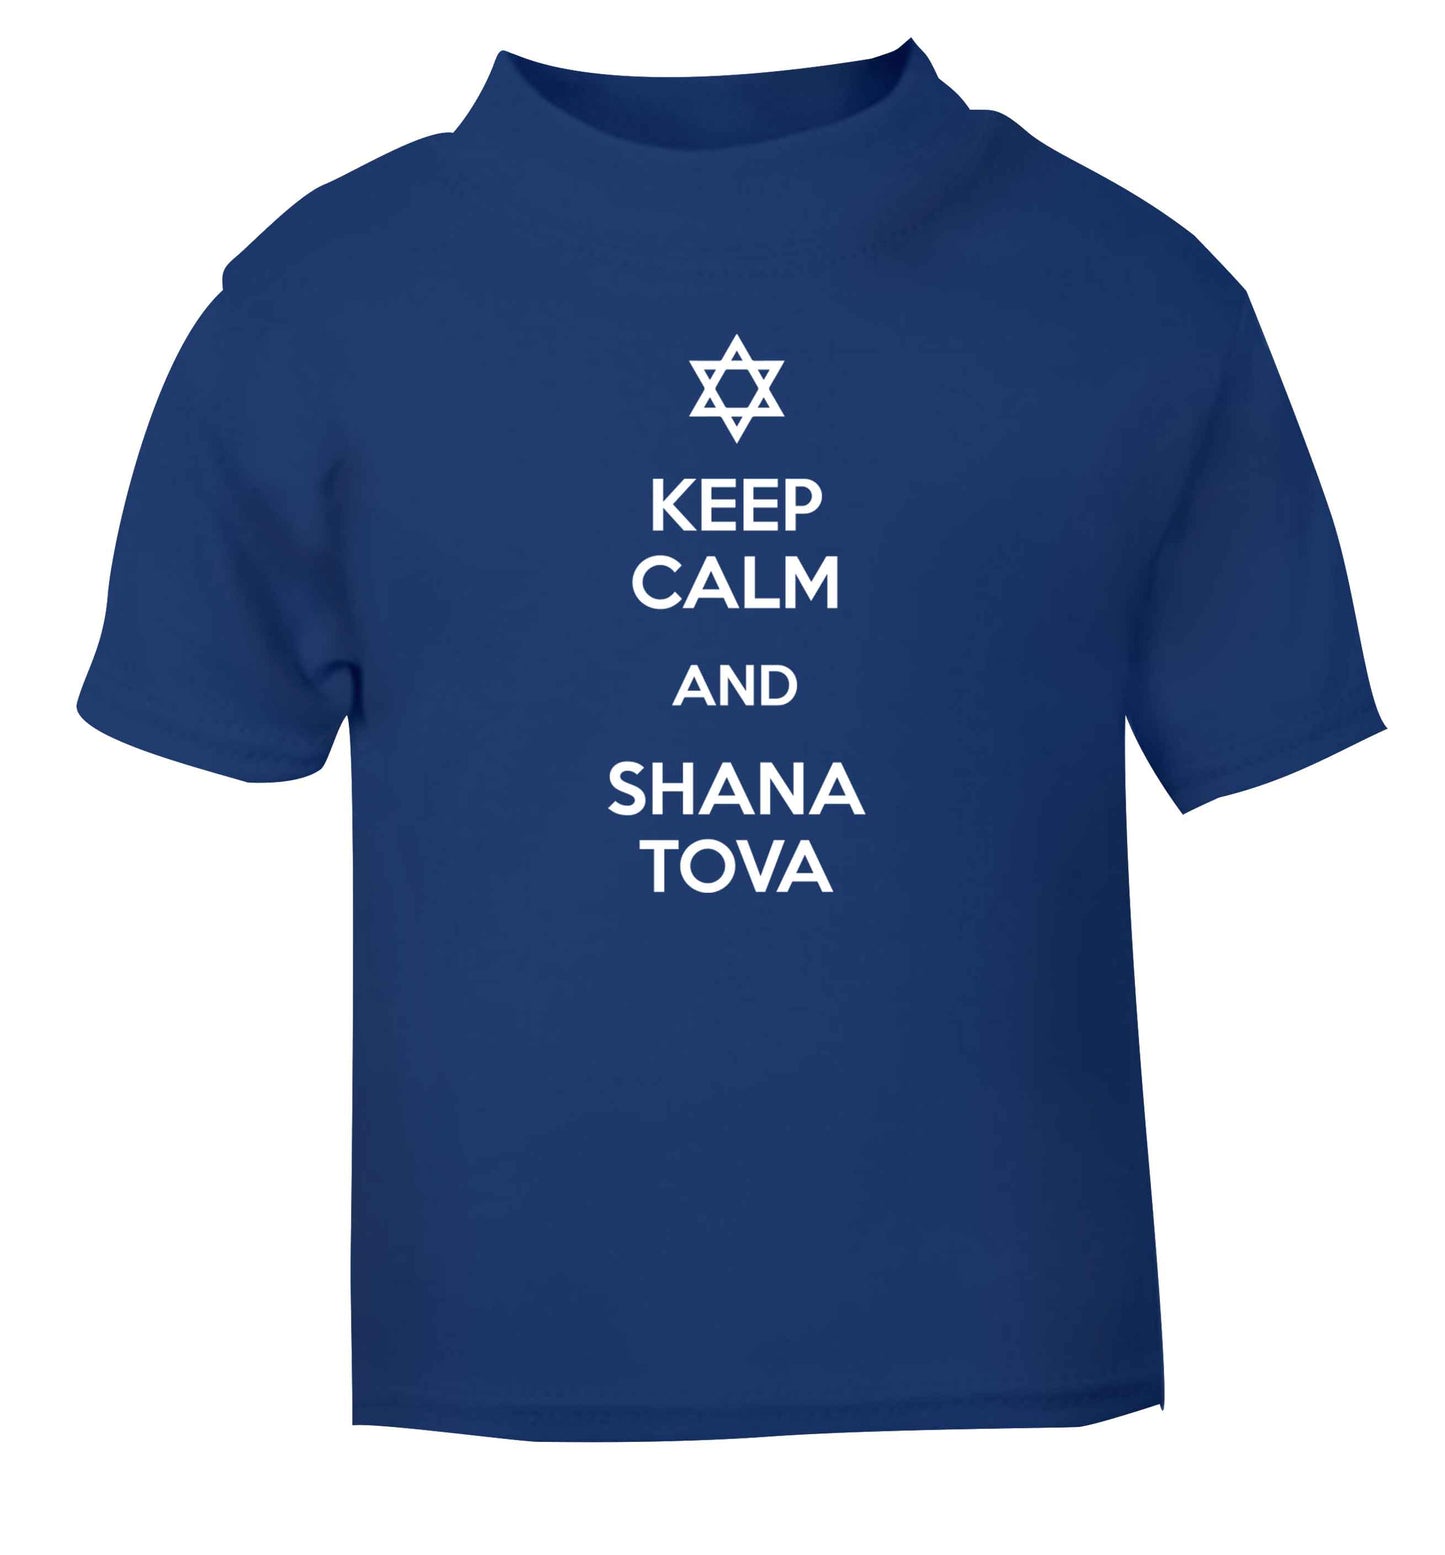 Keep calm and shana tova blue Baby Toddler Tshirt 2 Years